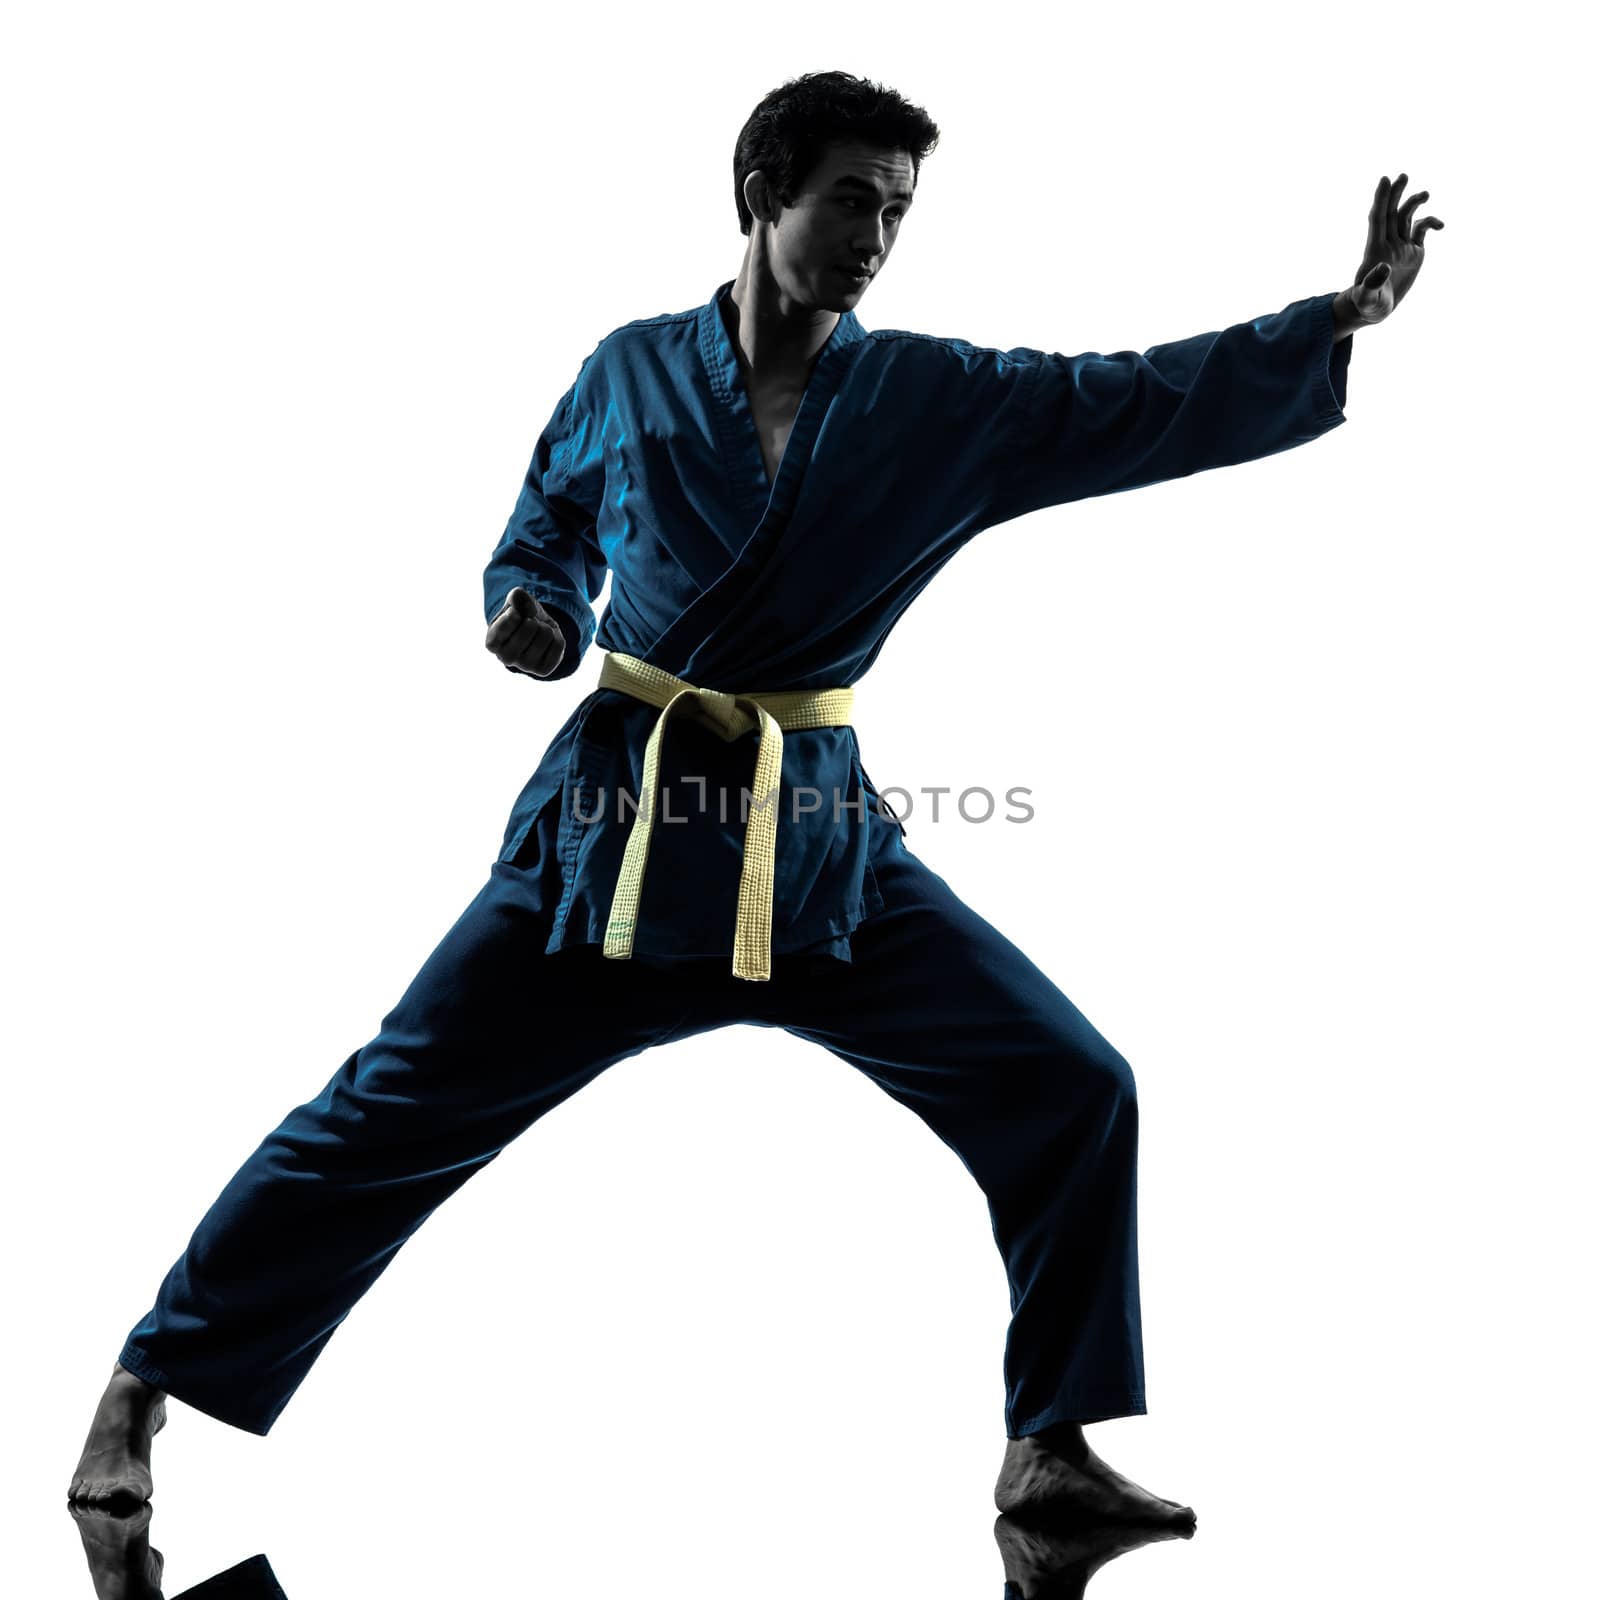 karate vietvodao martial arts man silhouette by PIXSTILL